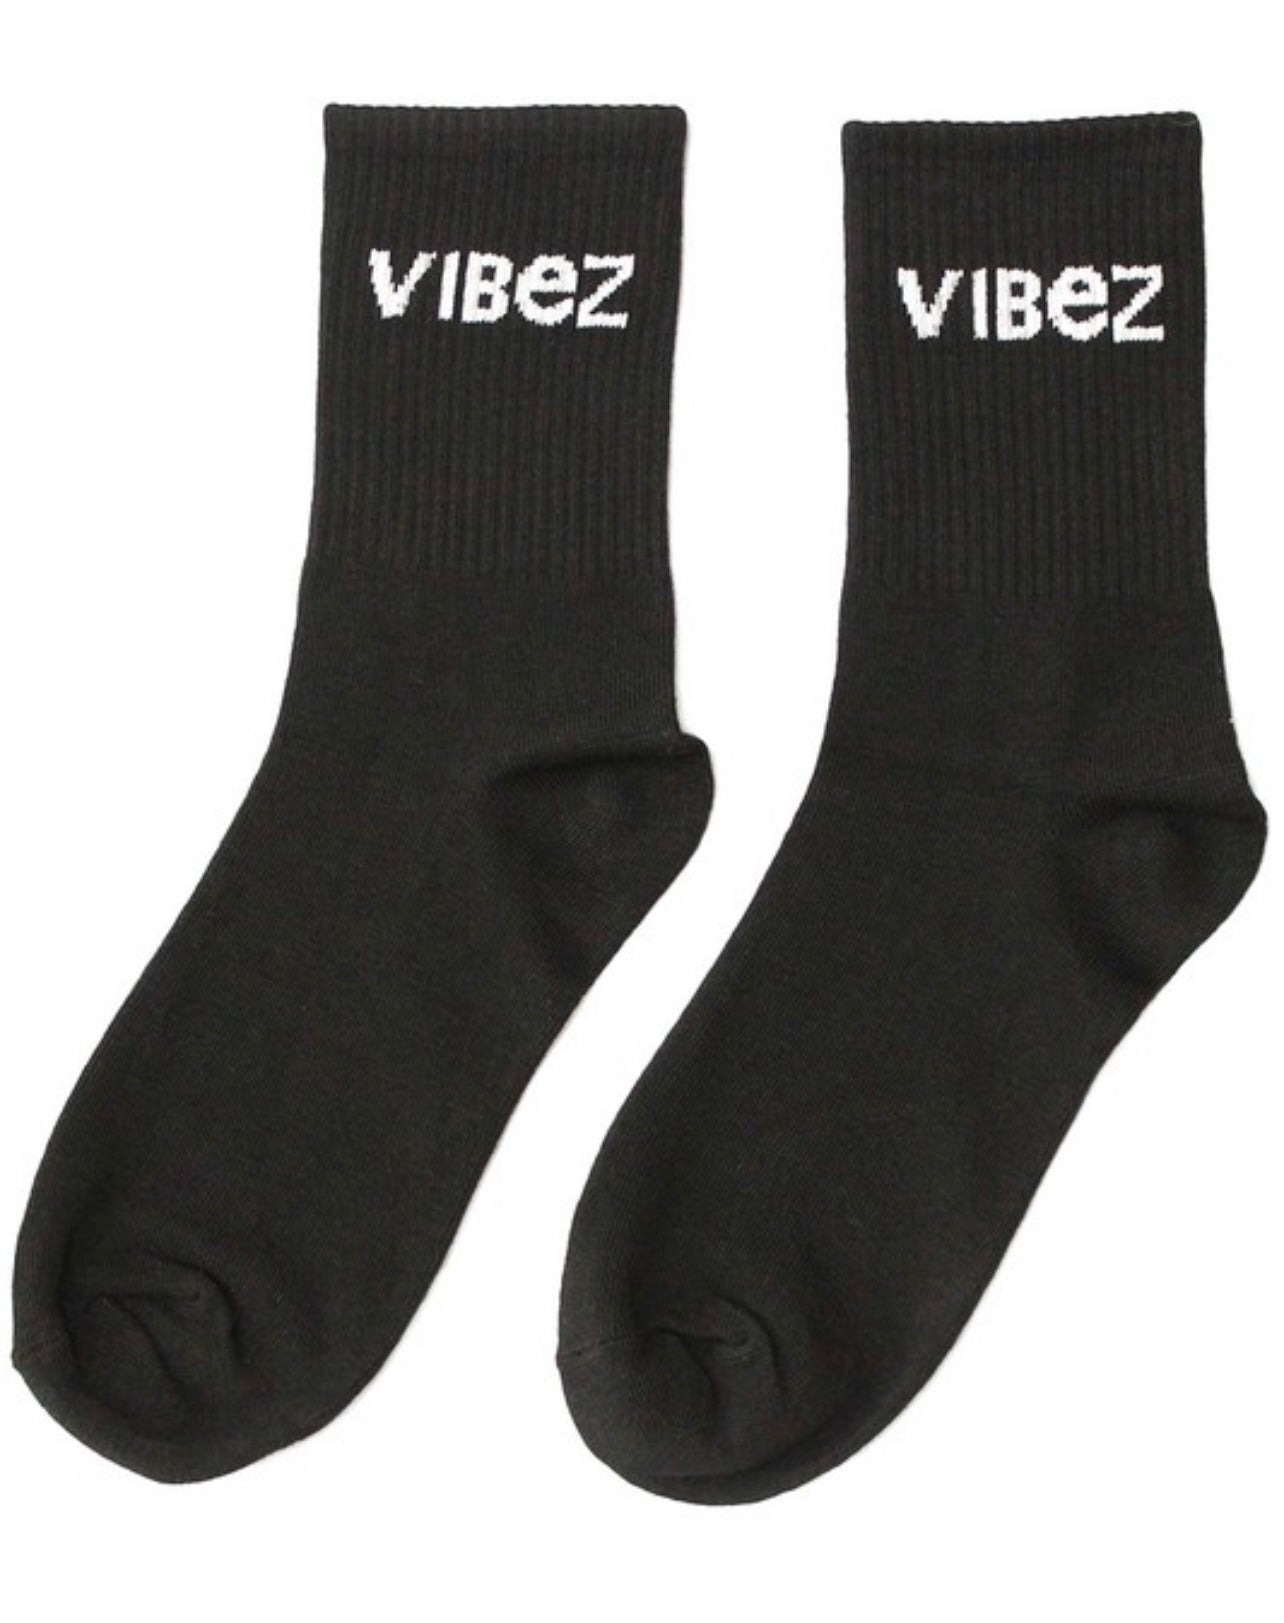 Black socks, vibez , vibez socks,